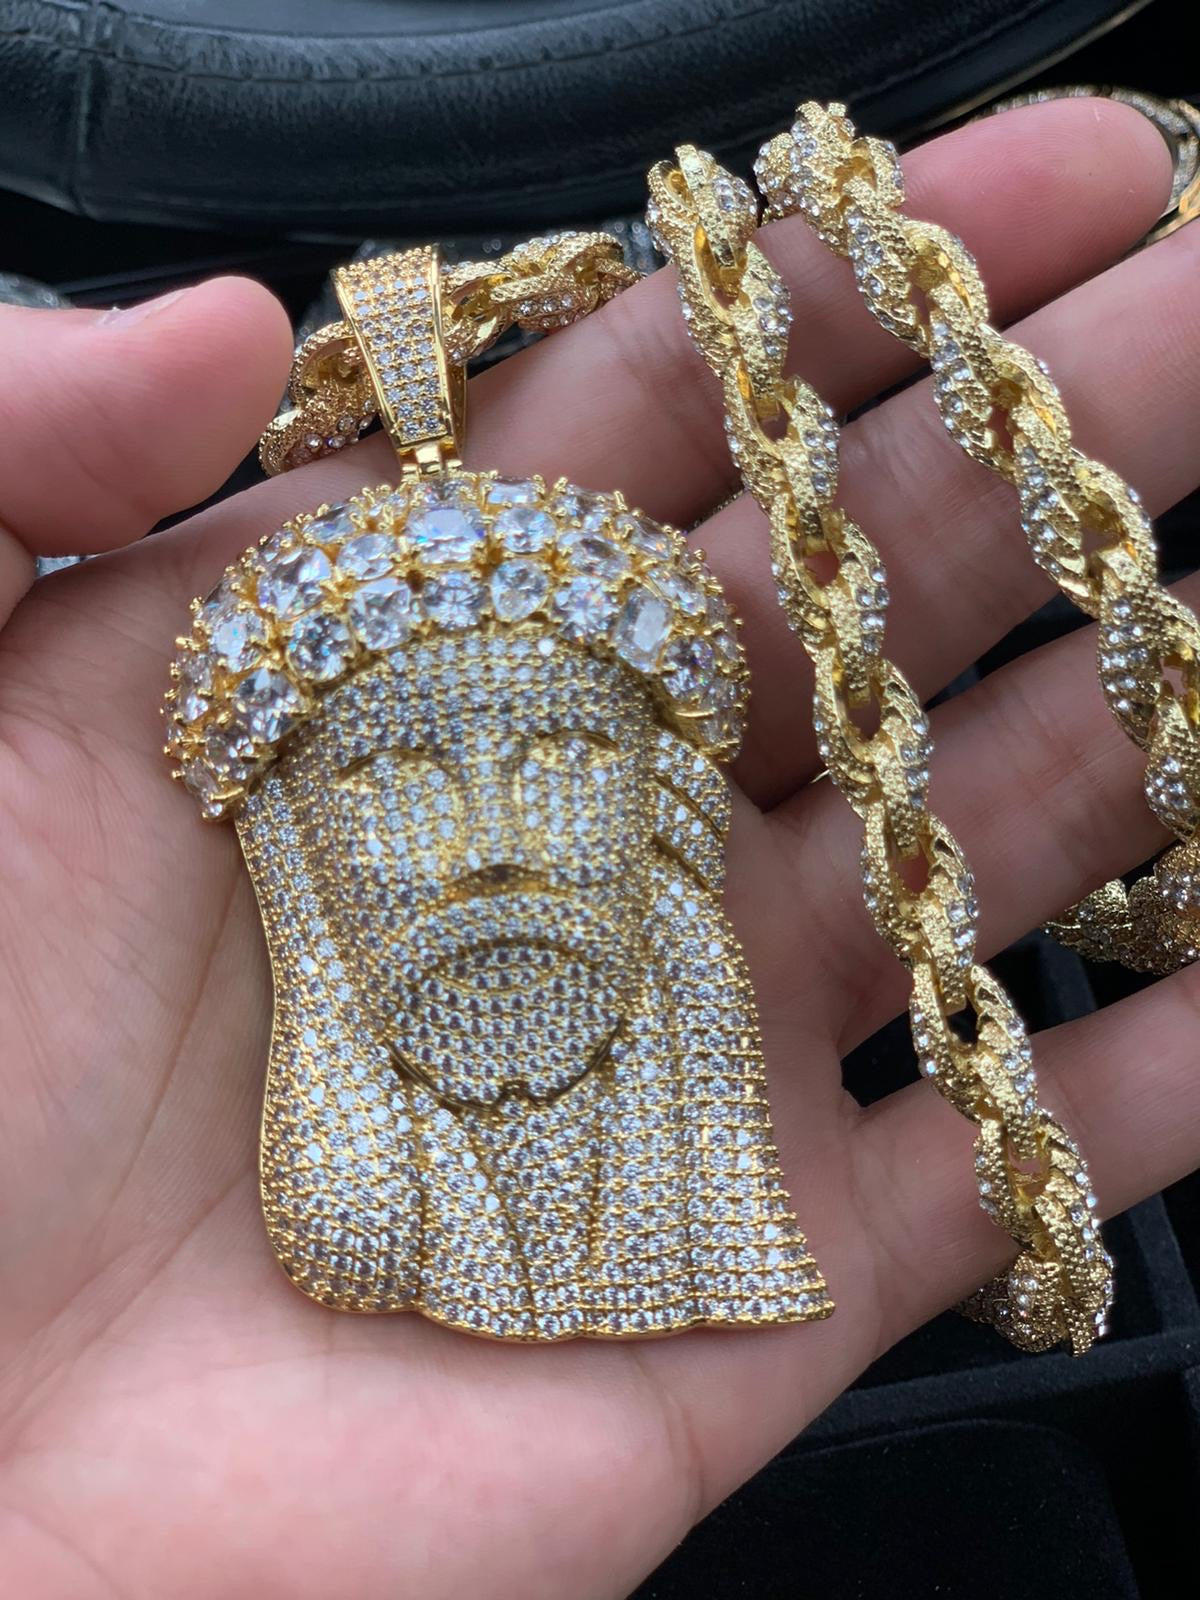 Jesus piece with chain